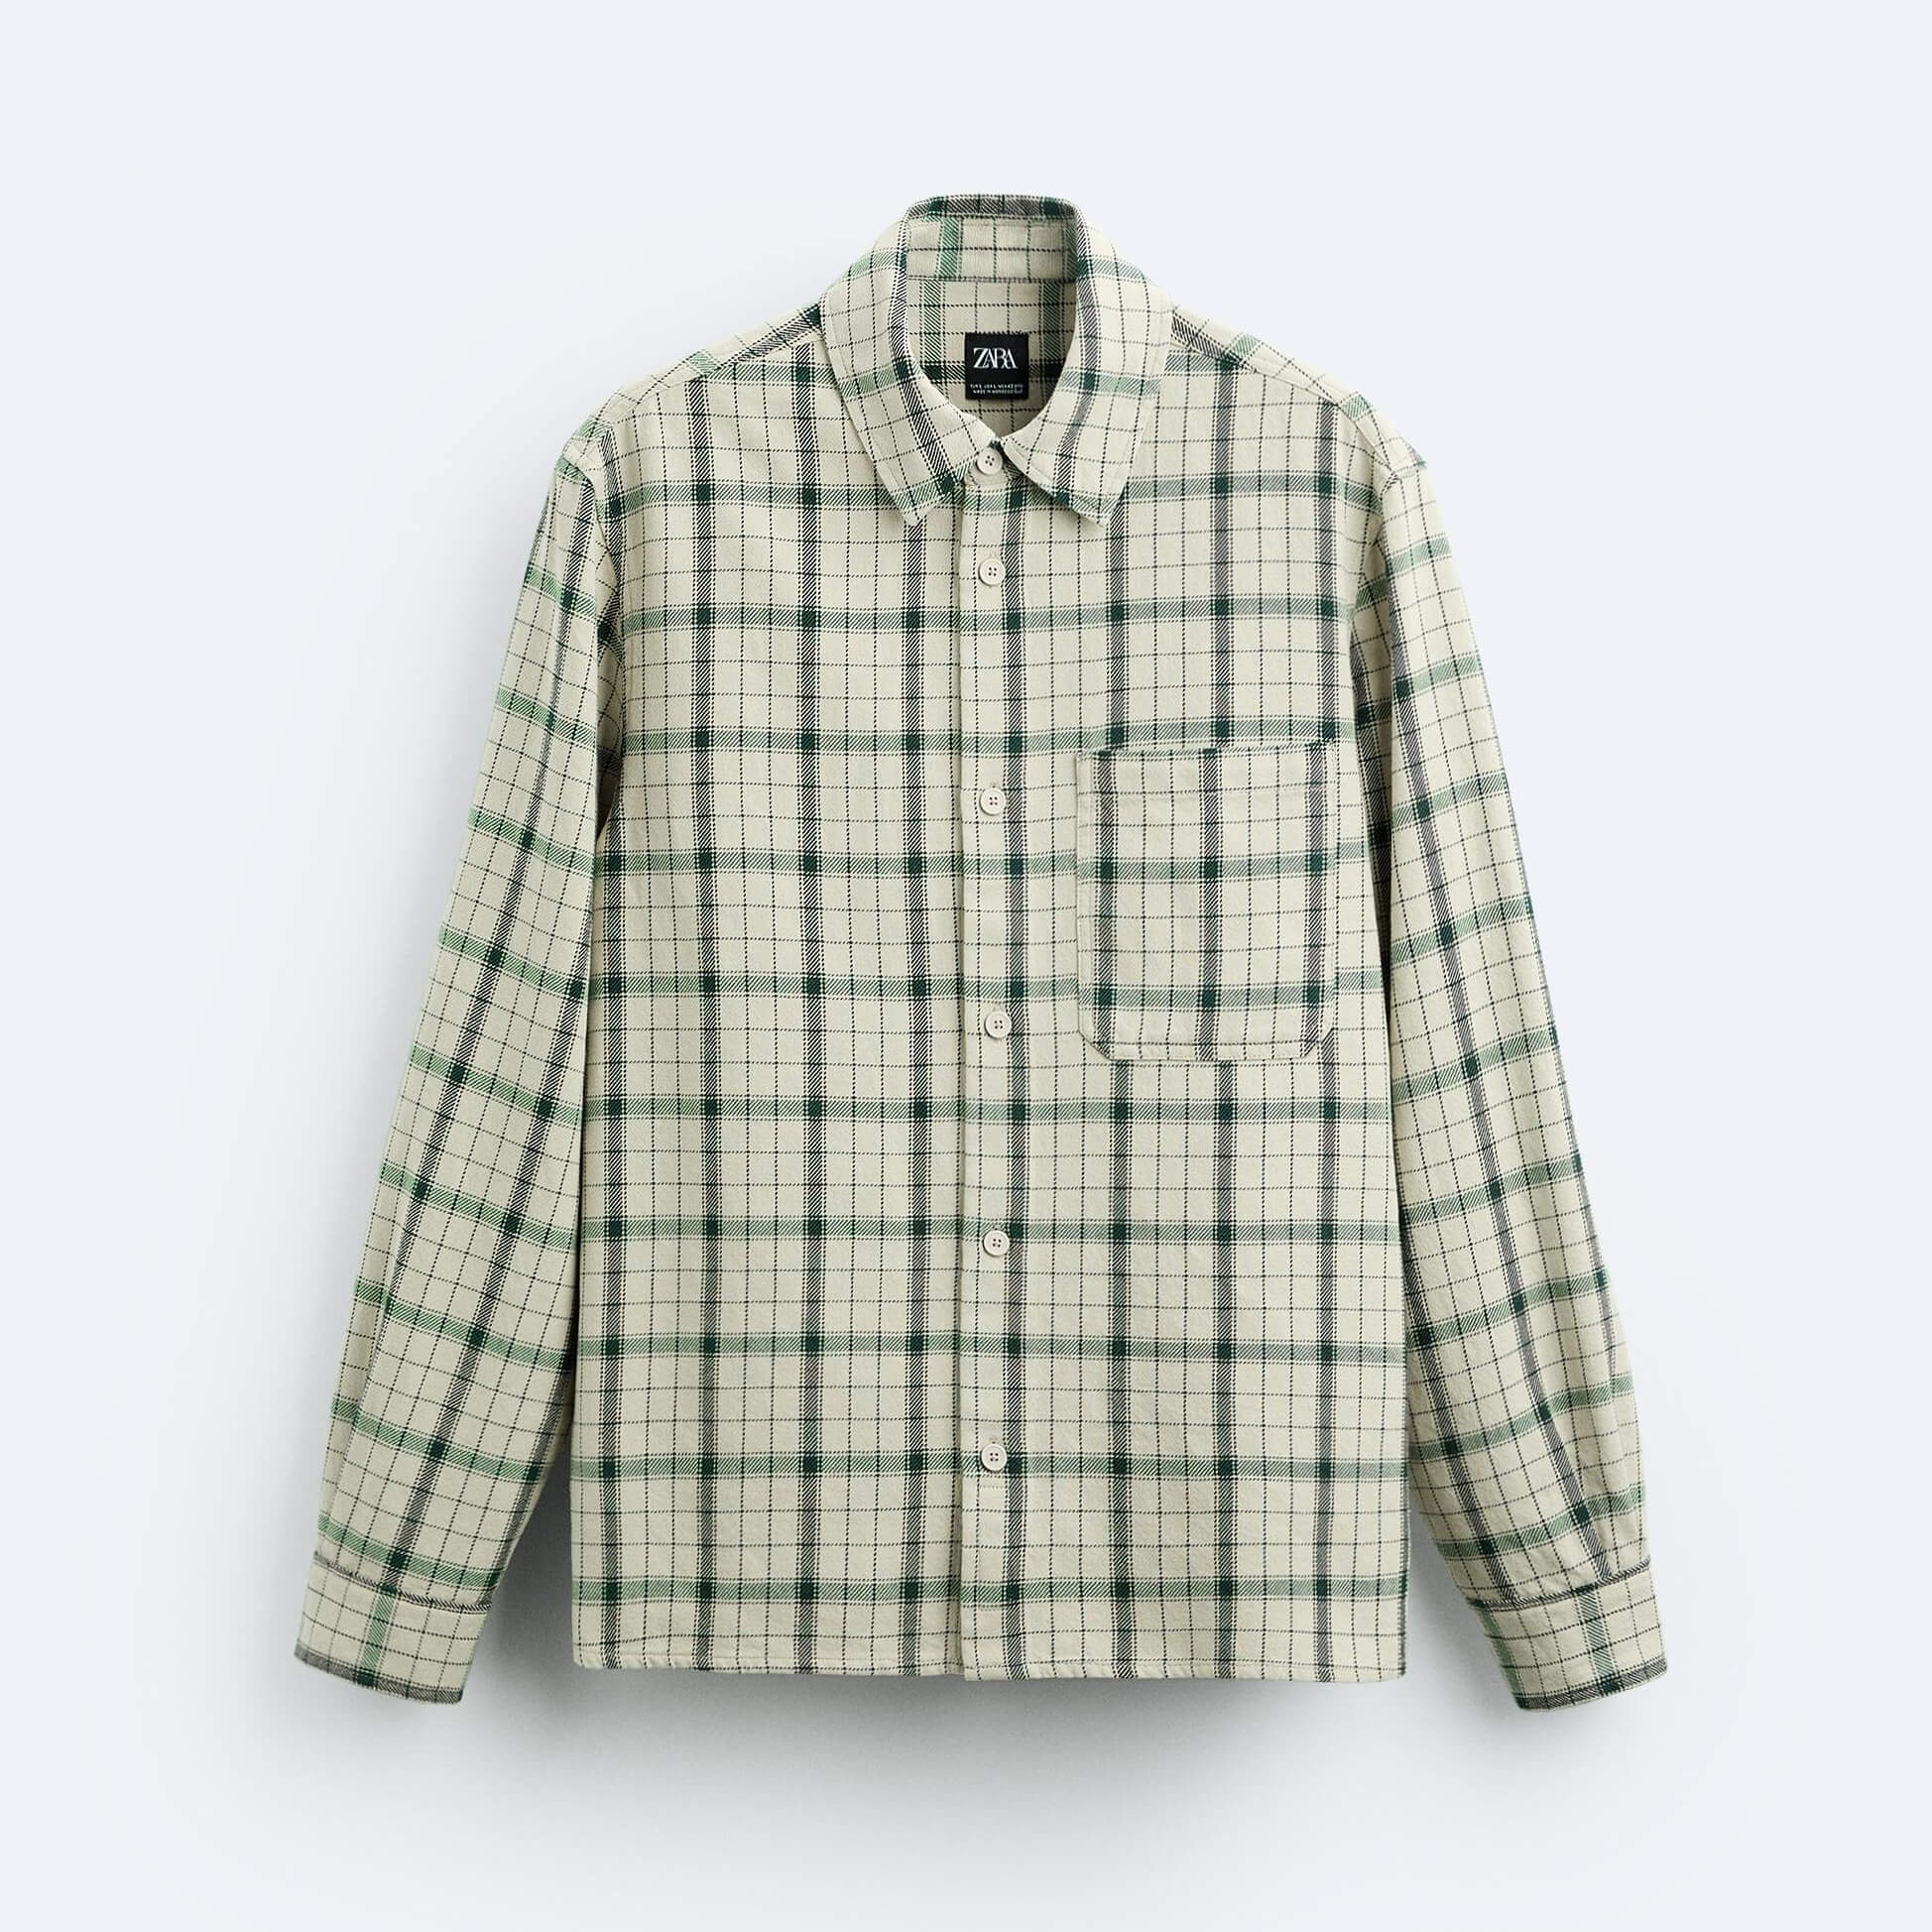 Рубашка верхняя Zara Check, светло-зеленый рубашка zara textured check светло бежевый